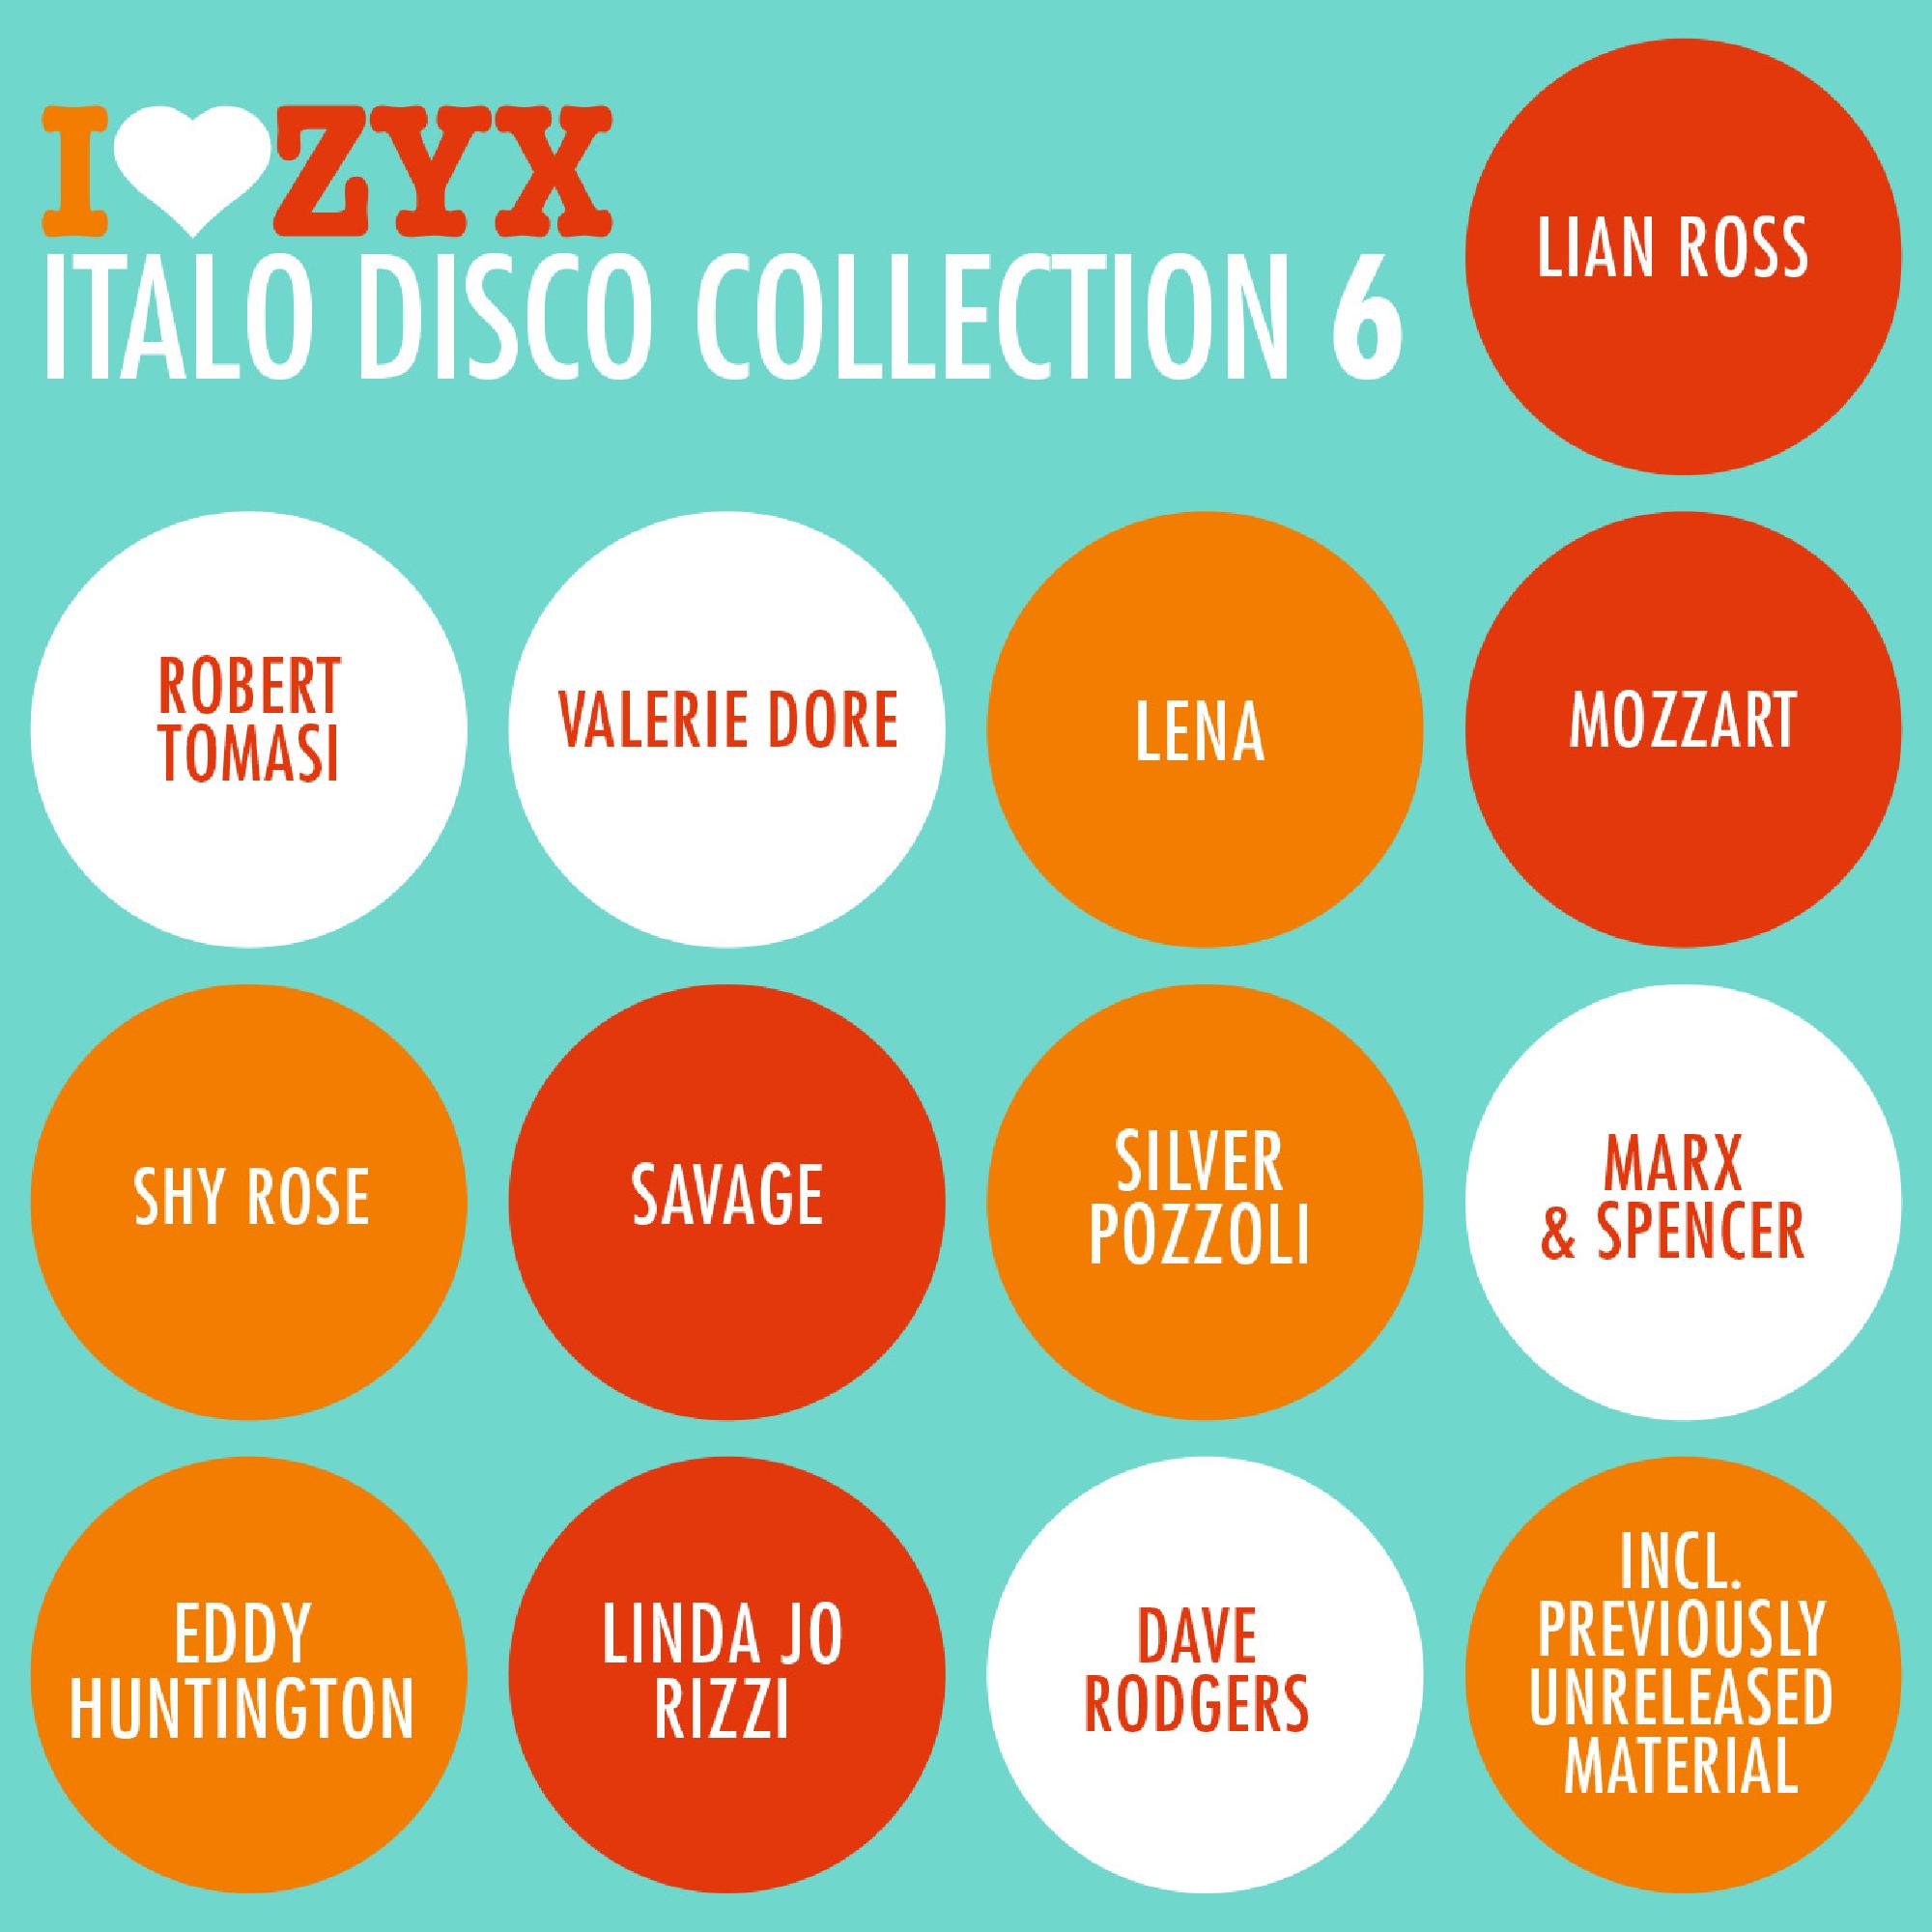 Zyx italo disco new generation 24. ZYX Italo Disco Spacesynth collection 9. ZYX Italo Disco Spacesynth collection 8 обложки. ZYX Italo Disco Spacesynth collection 6 cd1. Italo Disco Generation.